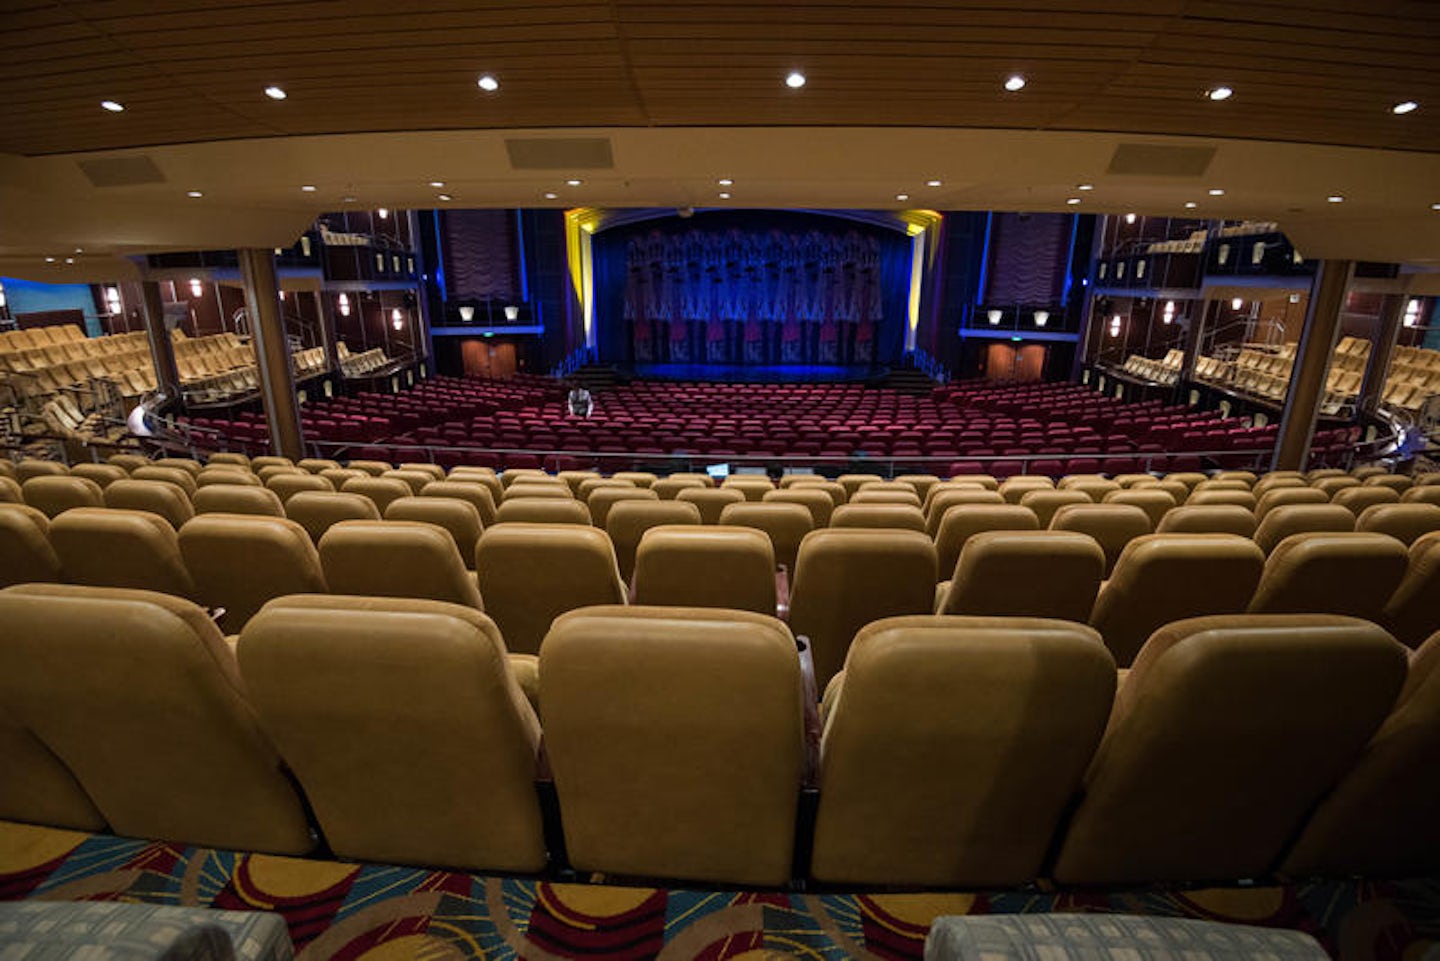 Arcadia Theater on Freedom of the Seas